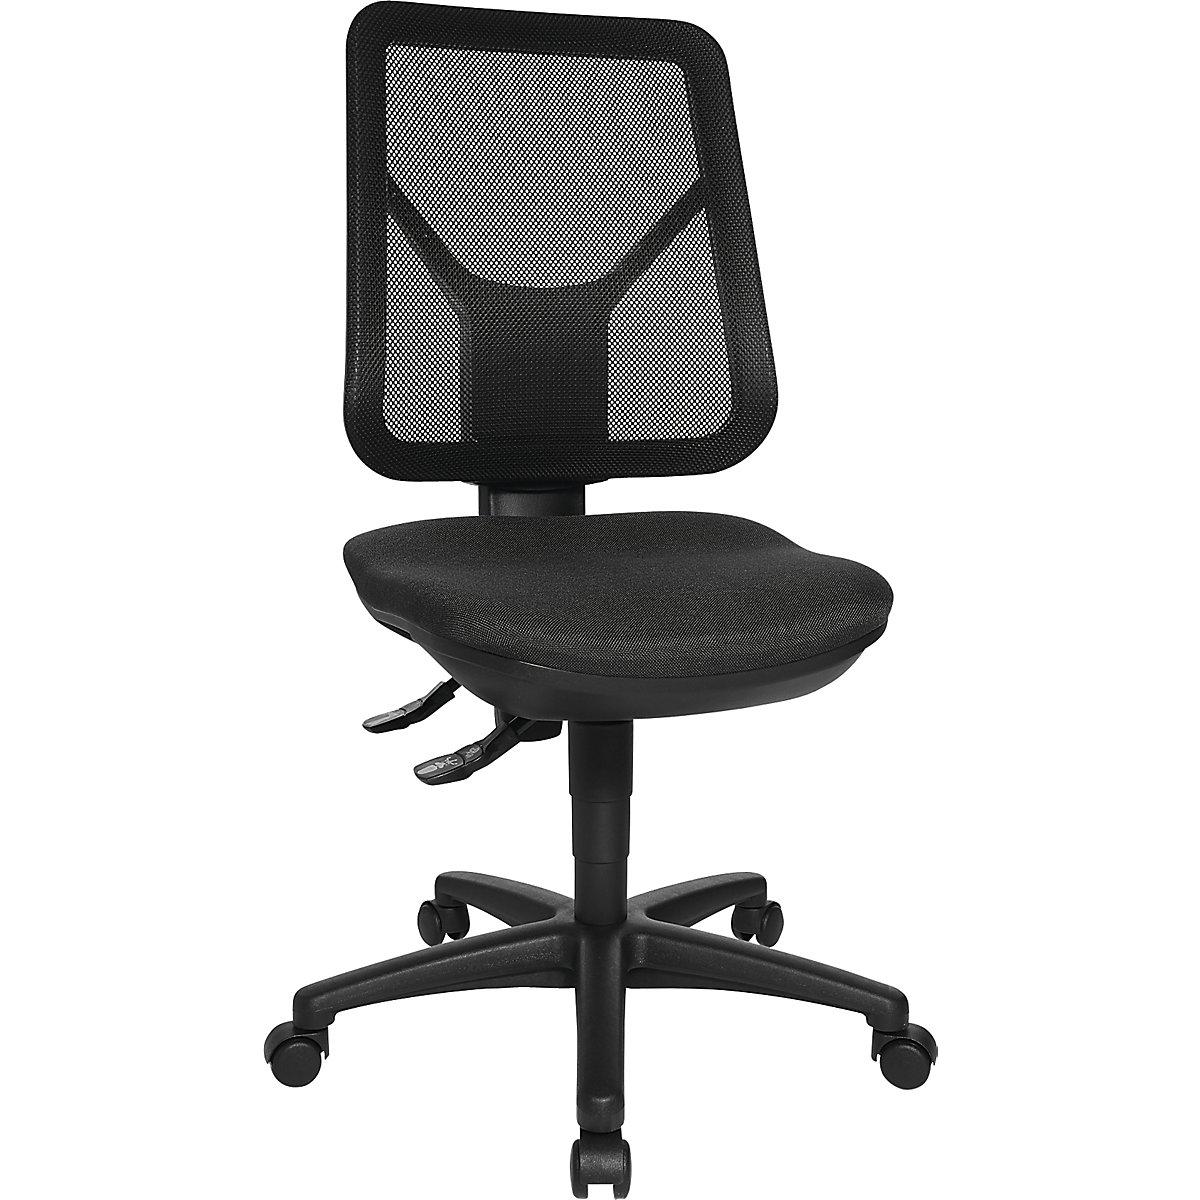 Ergonomic swivel chair – Topstar